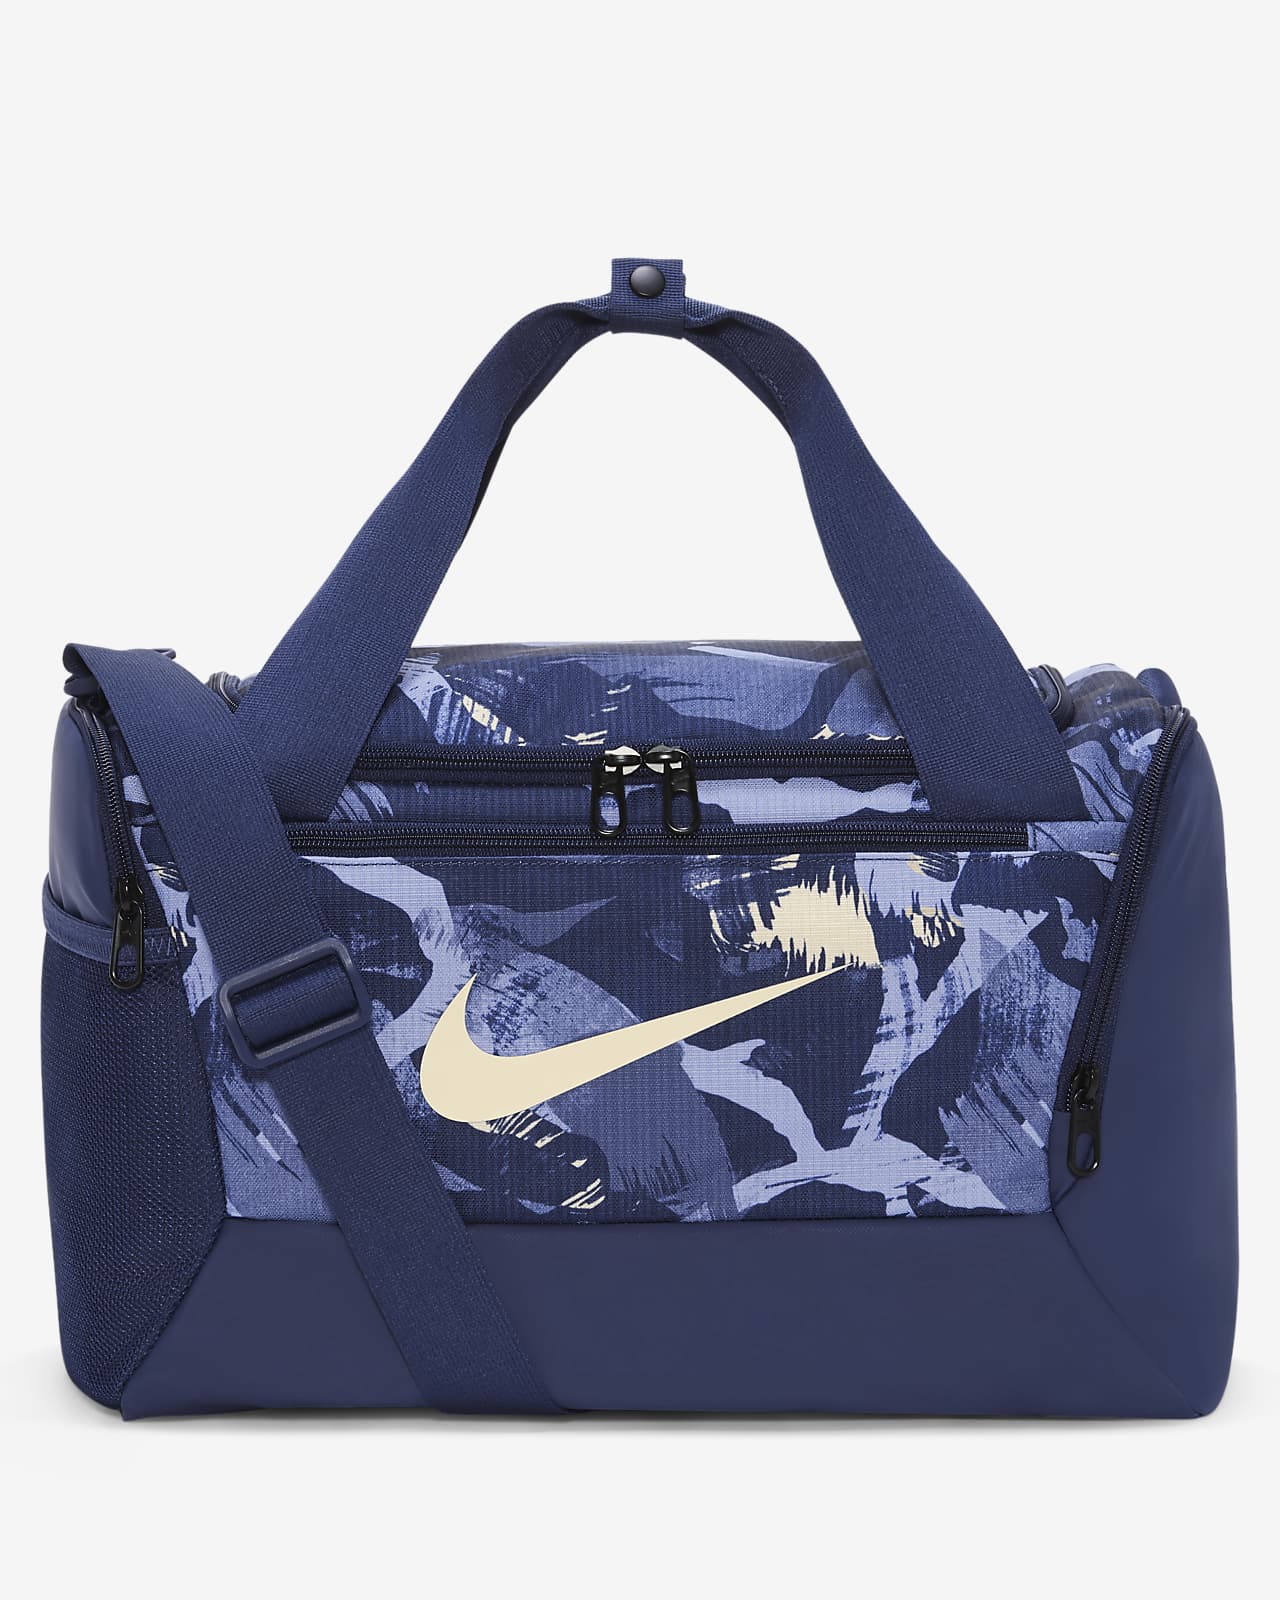 Nike Brasilia Travel Gym Duffel Bag - XS Size